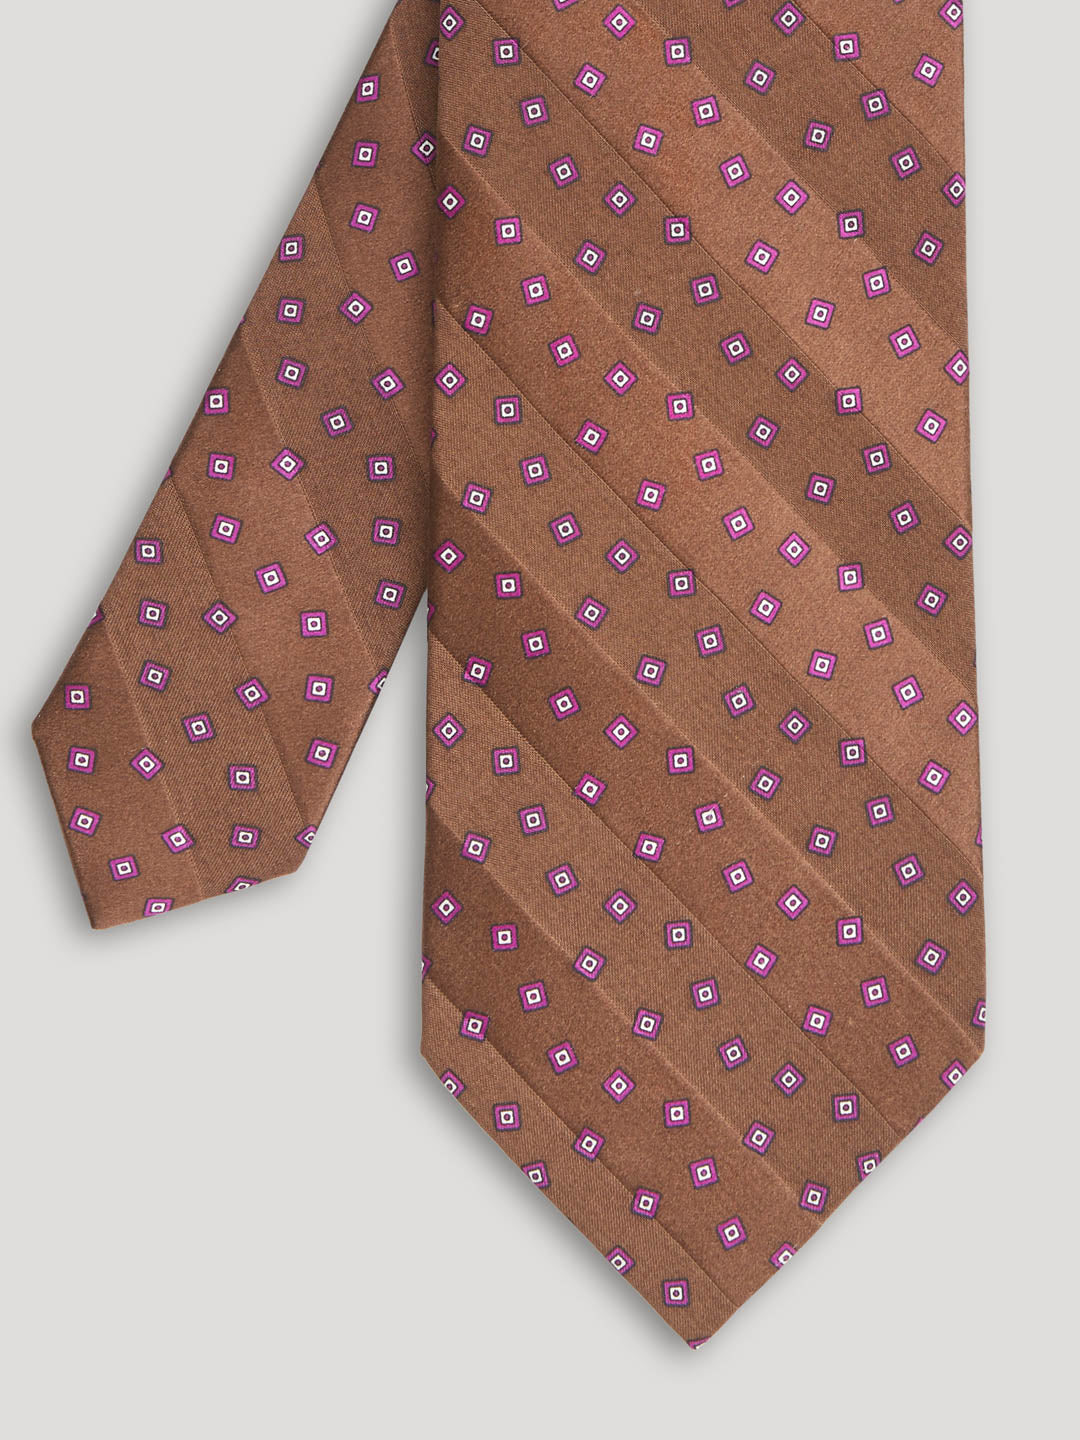 Brown stripe tie with small diamond design. 